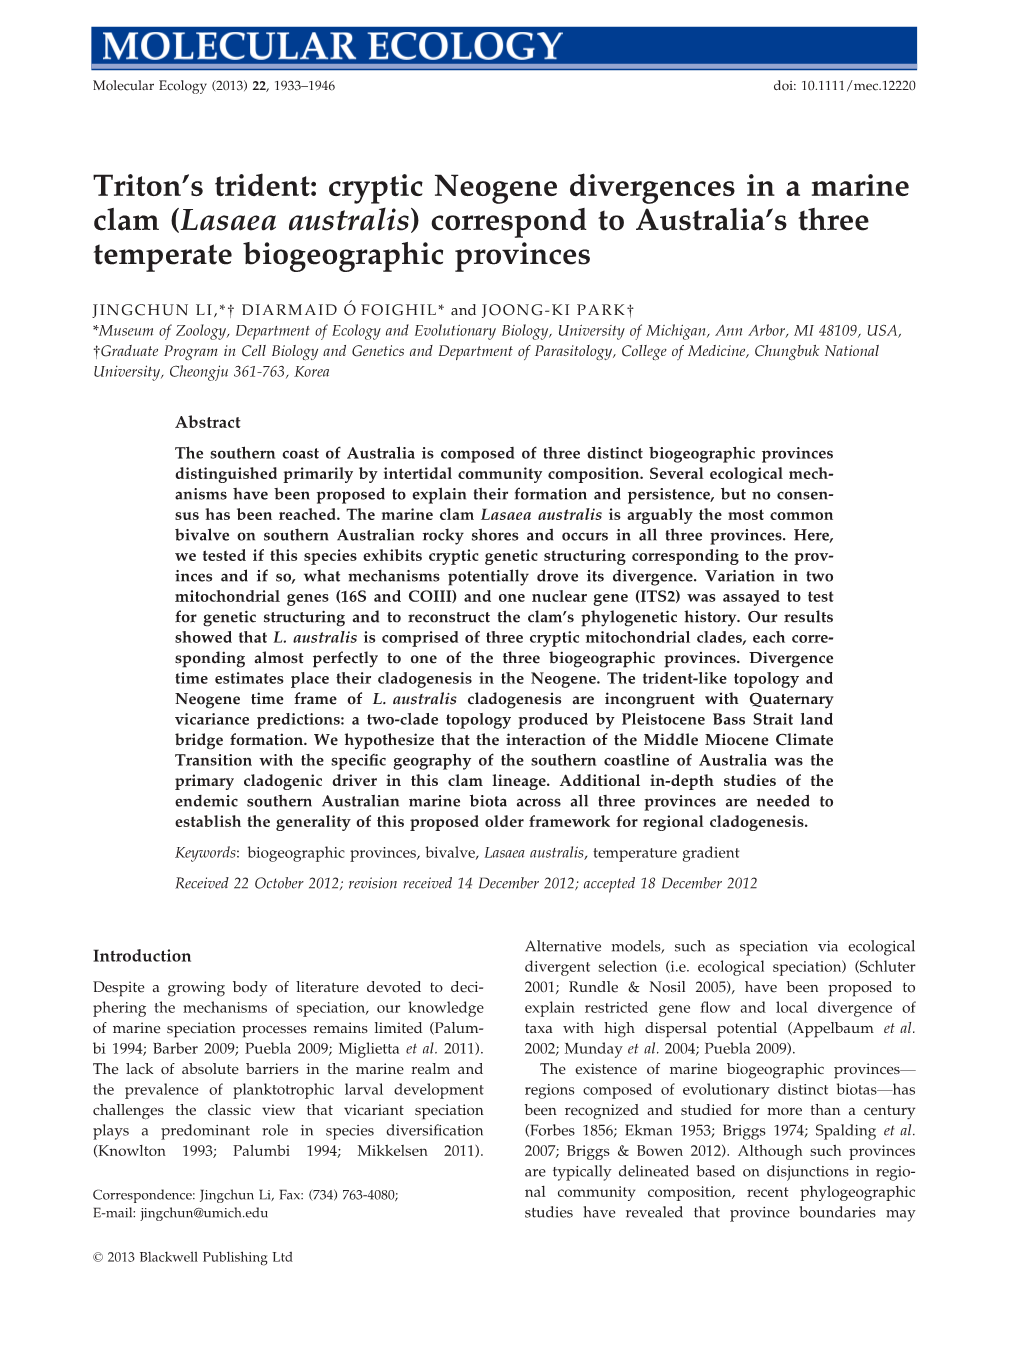 Lasaea Australis) Correspond to Australia’S Three Temperate Biogeographic Provinces